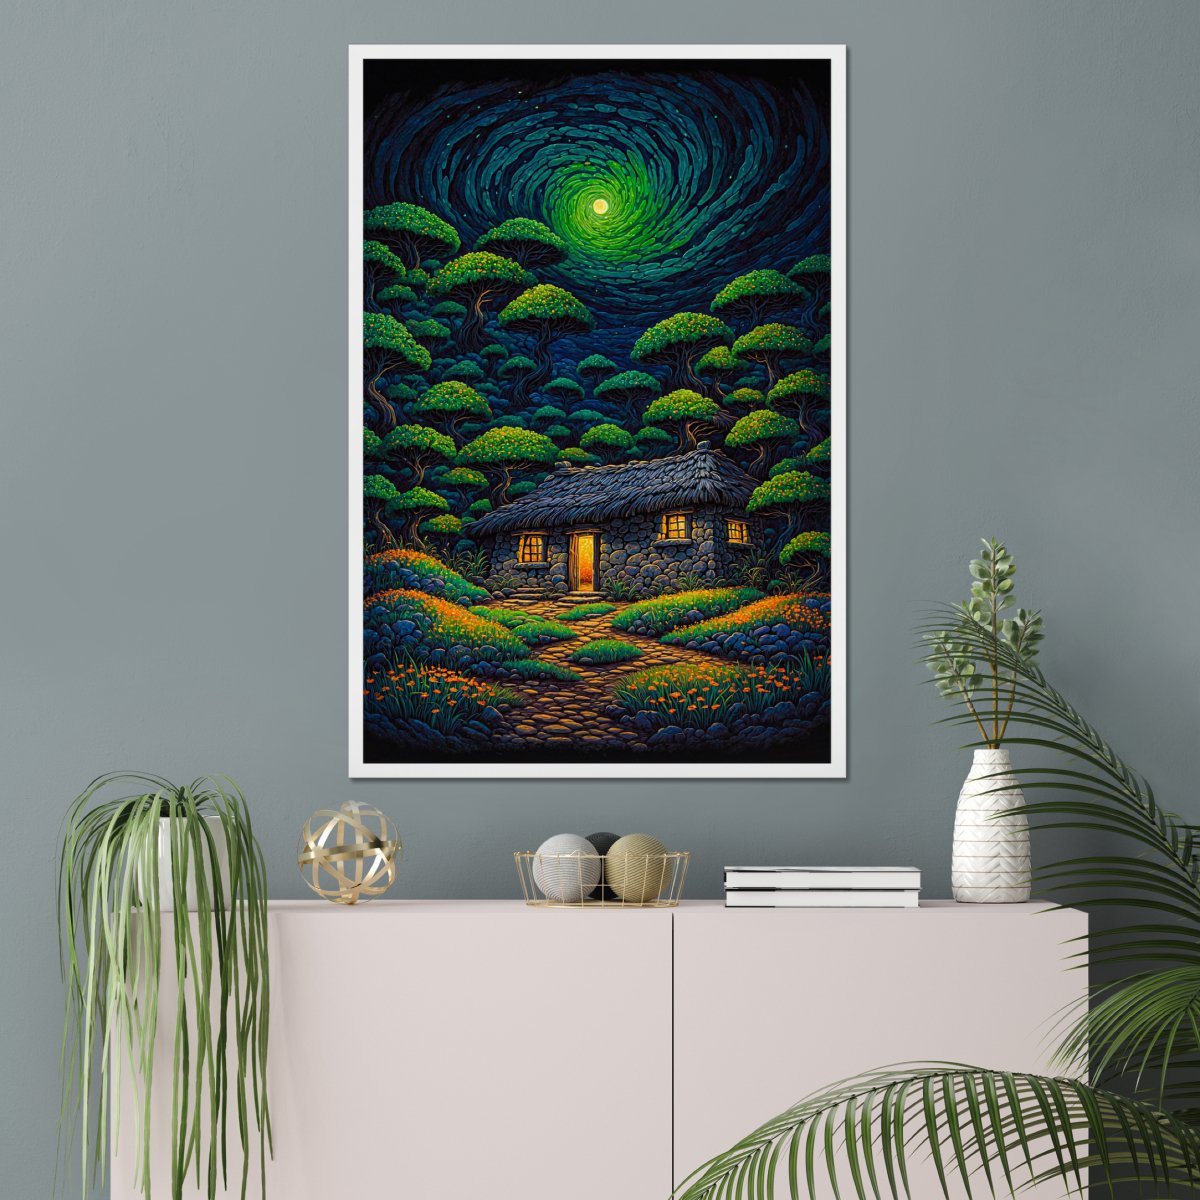 Emerald rock tavern - Art print - Poster - Ever colorful